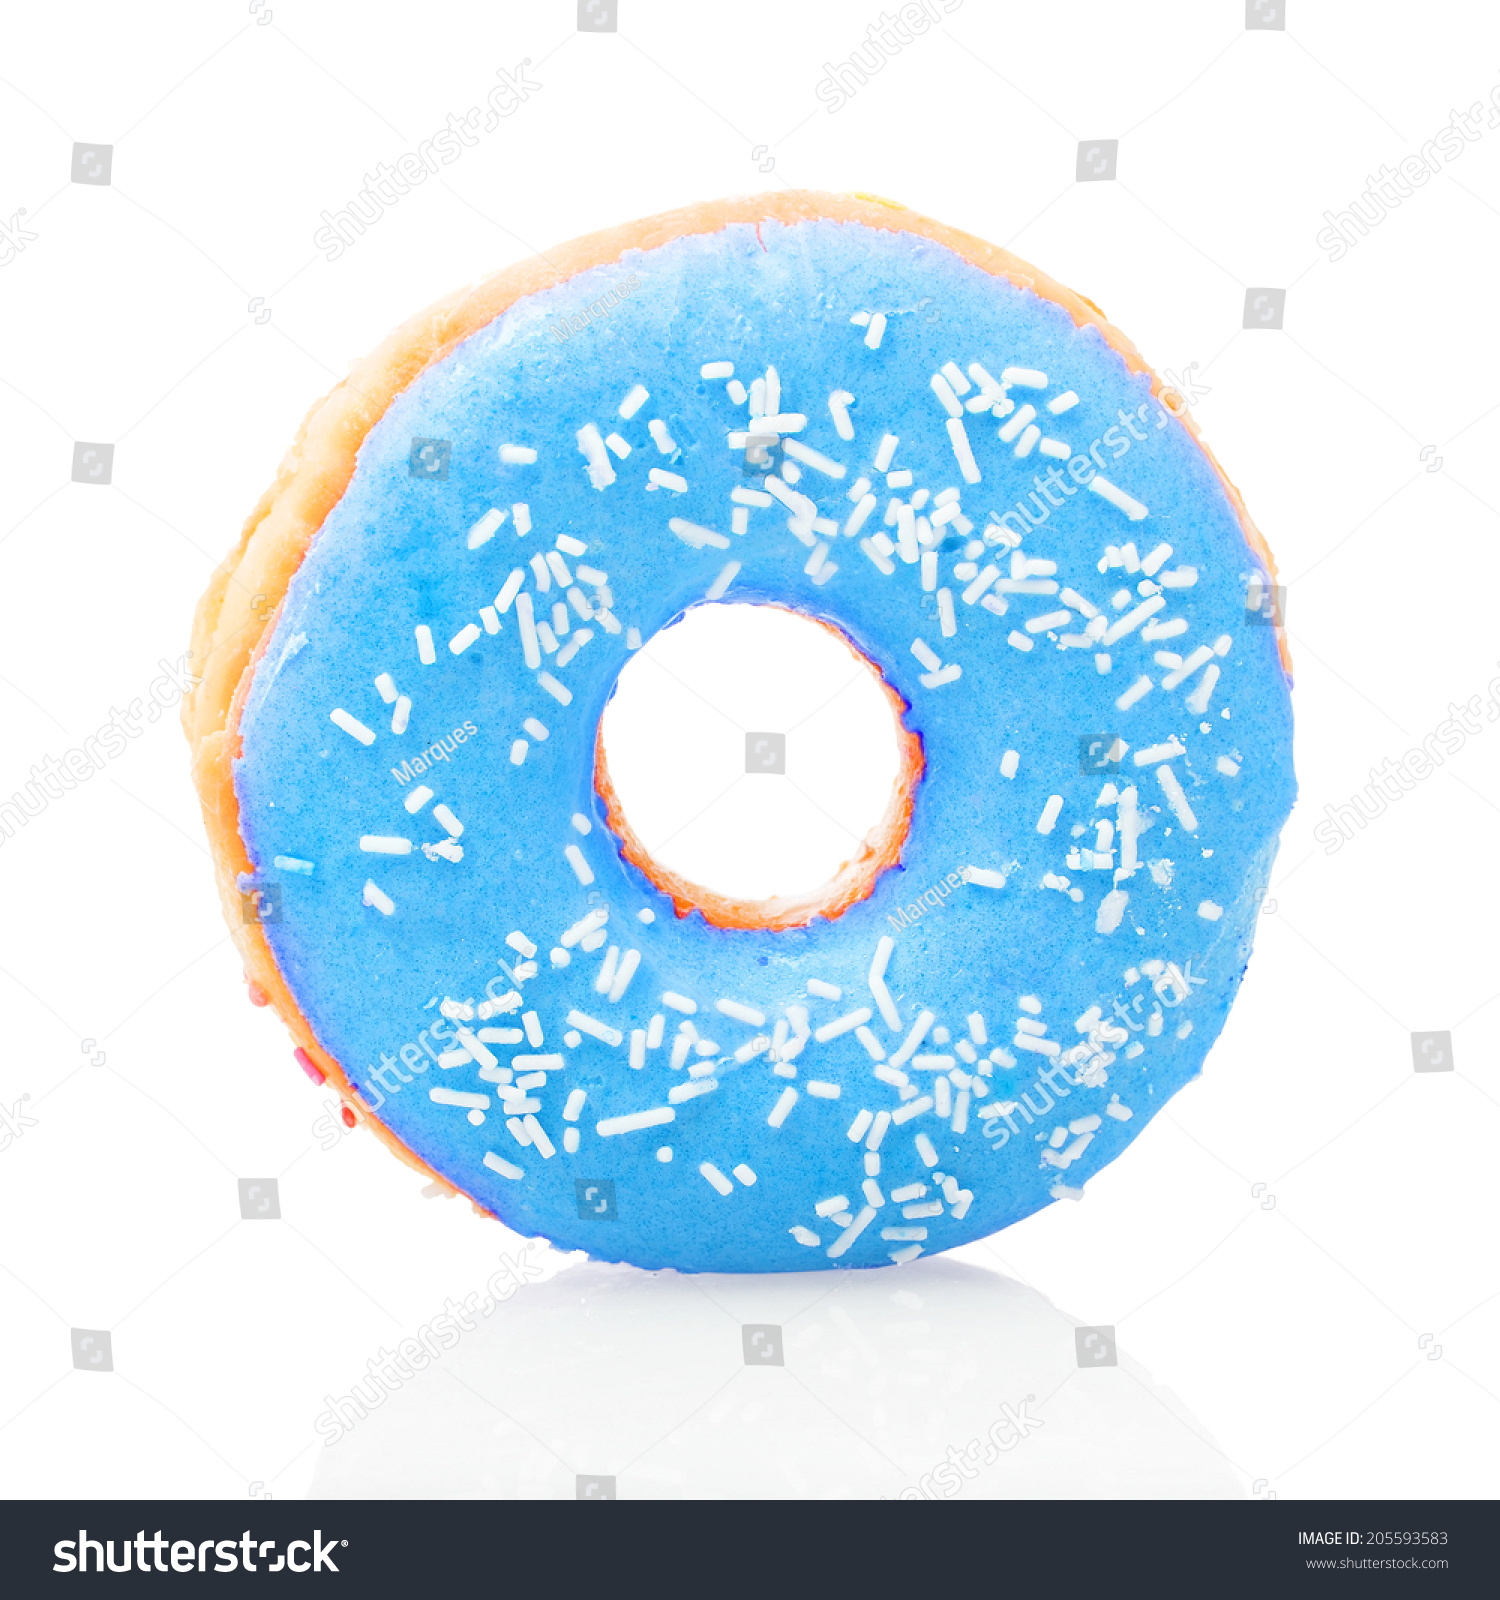 stock-photo-blue-donut-on-white-background-205593583.jpg